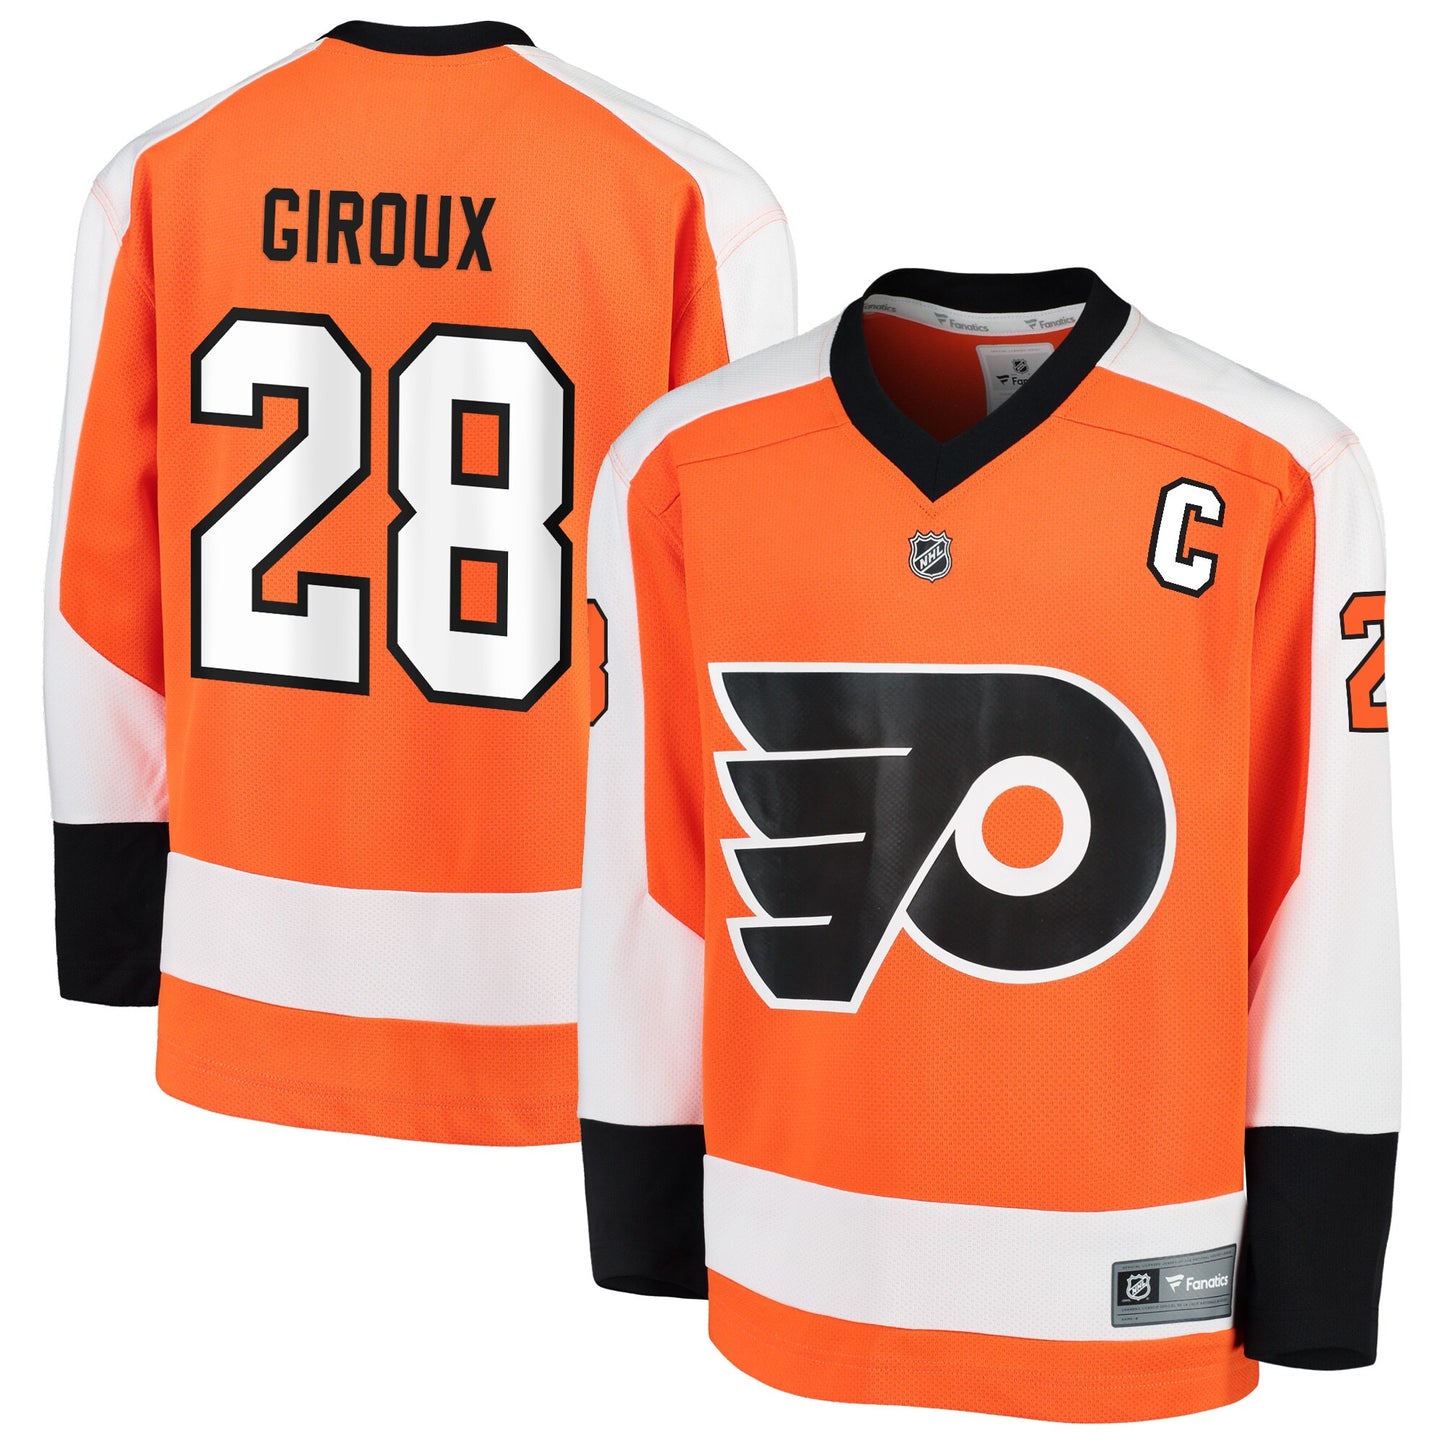 Claude Giroux Philadelphia Flyers Fanatics Branded Youth Replica Player Jersey - Orange